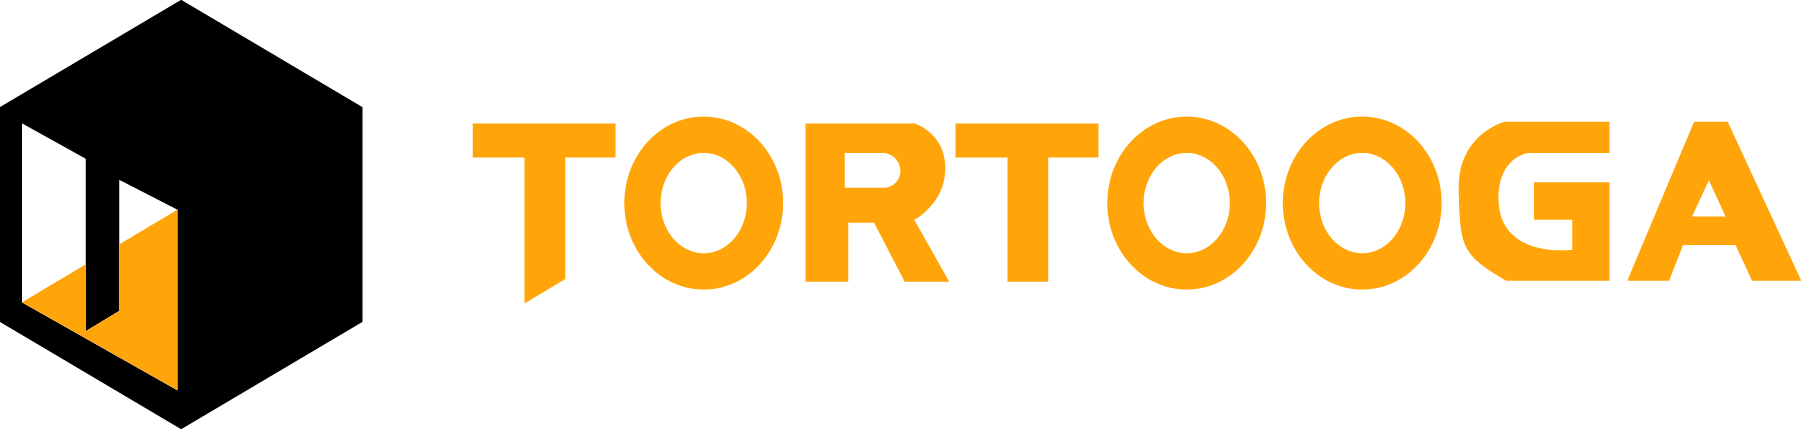 Tortooga Logo  | Get best web application security services in Australia | Exigo Tech Australia